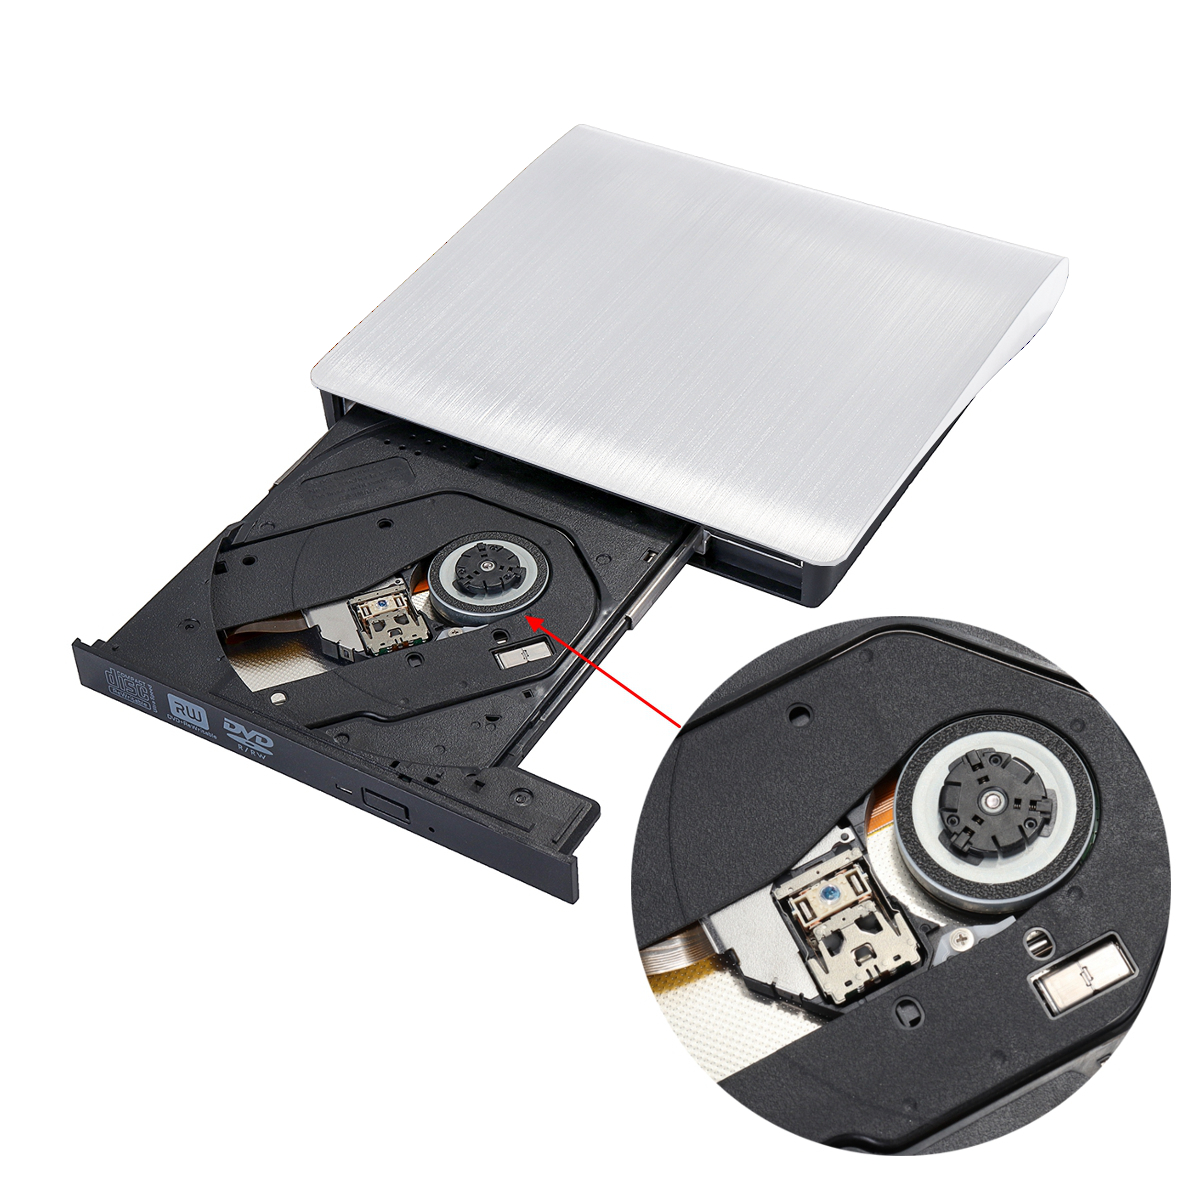 USB-30-Slim-External-DVD-Optical-Drive-DVD-RW-CD-RW-Combo-Drive-Burner-Reader-Player-1564087-10